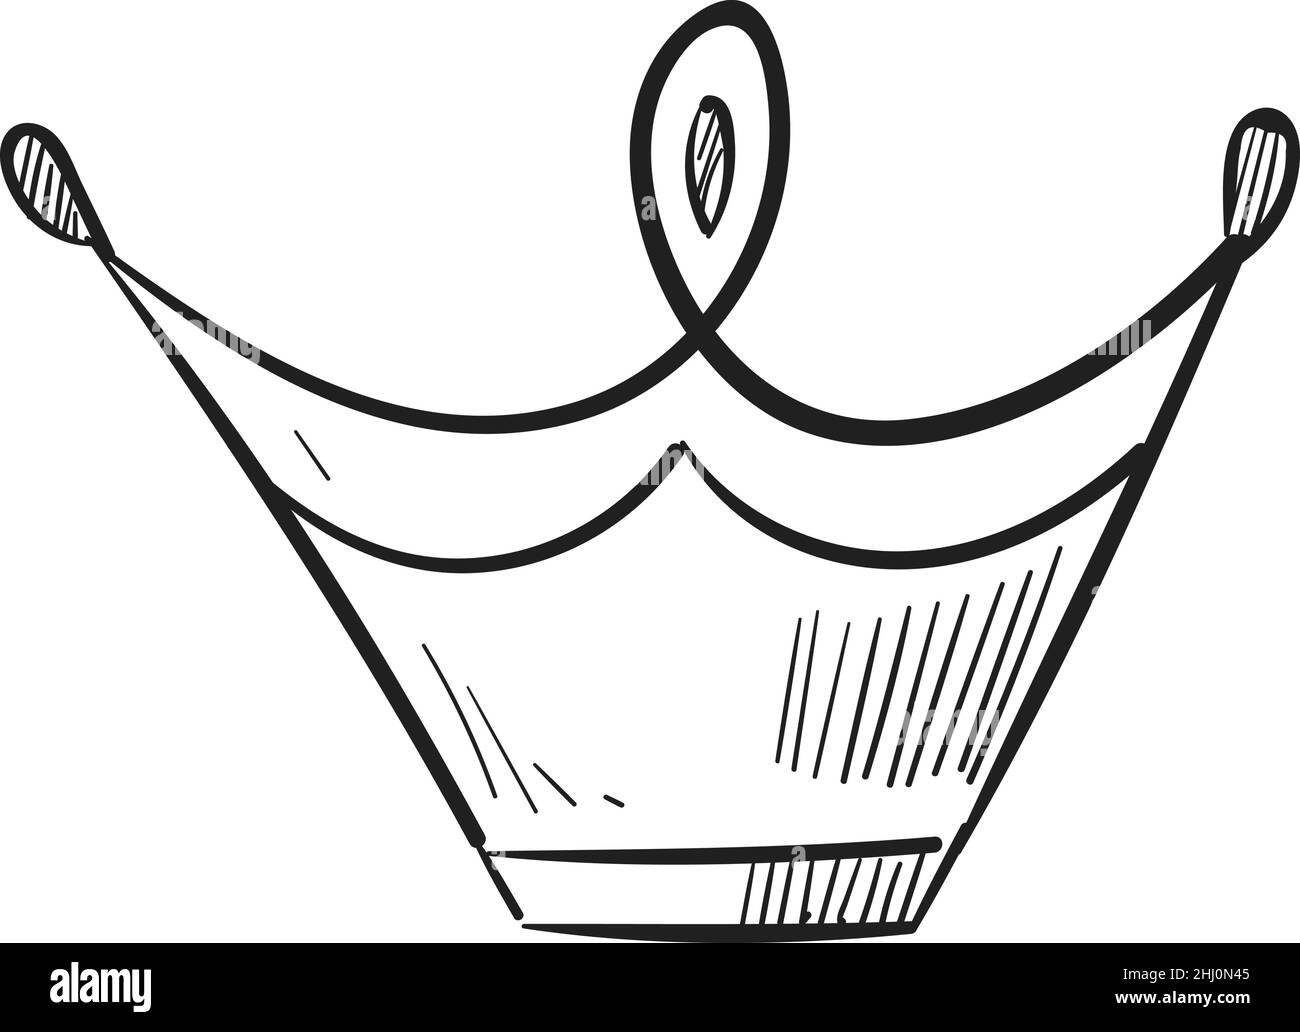 Crown icon in pen scribble style. Kingdom symbol Stock Vector